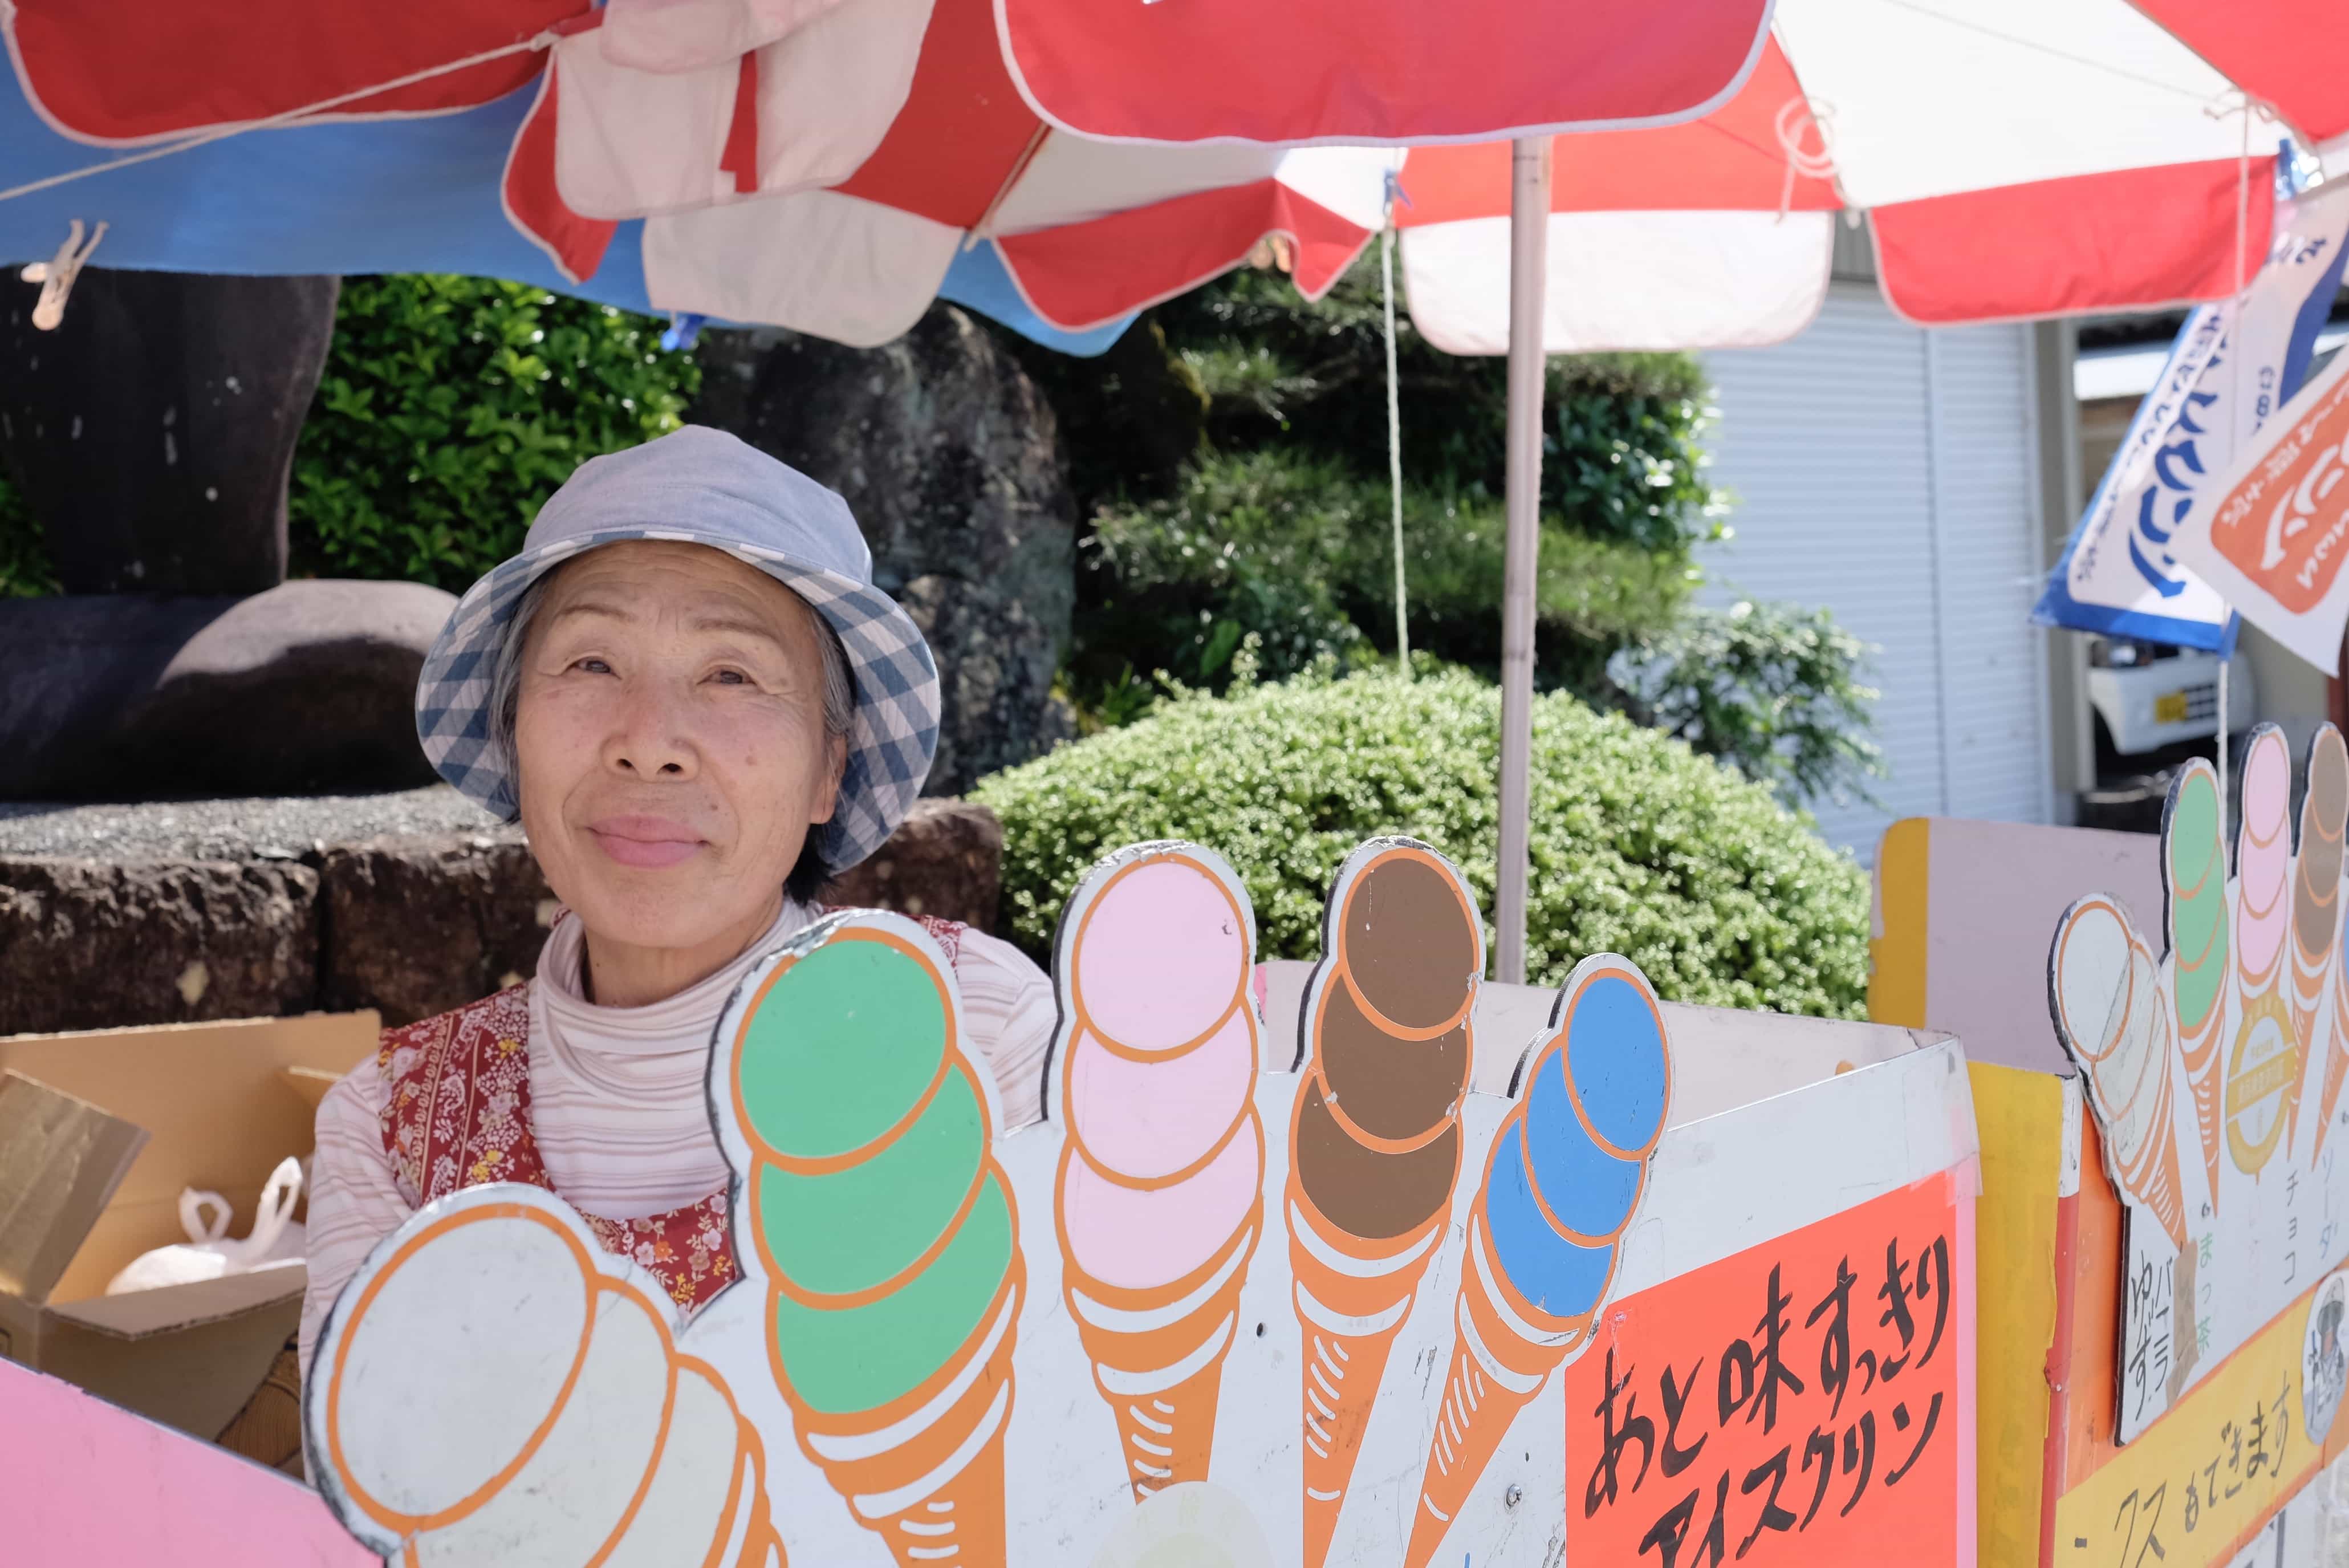 Tanema-ji ice cream lady